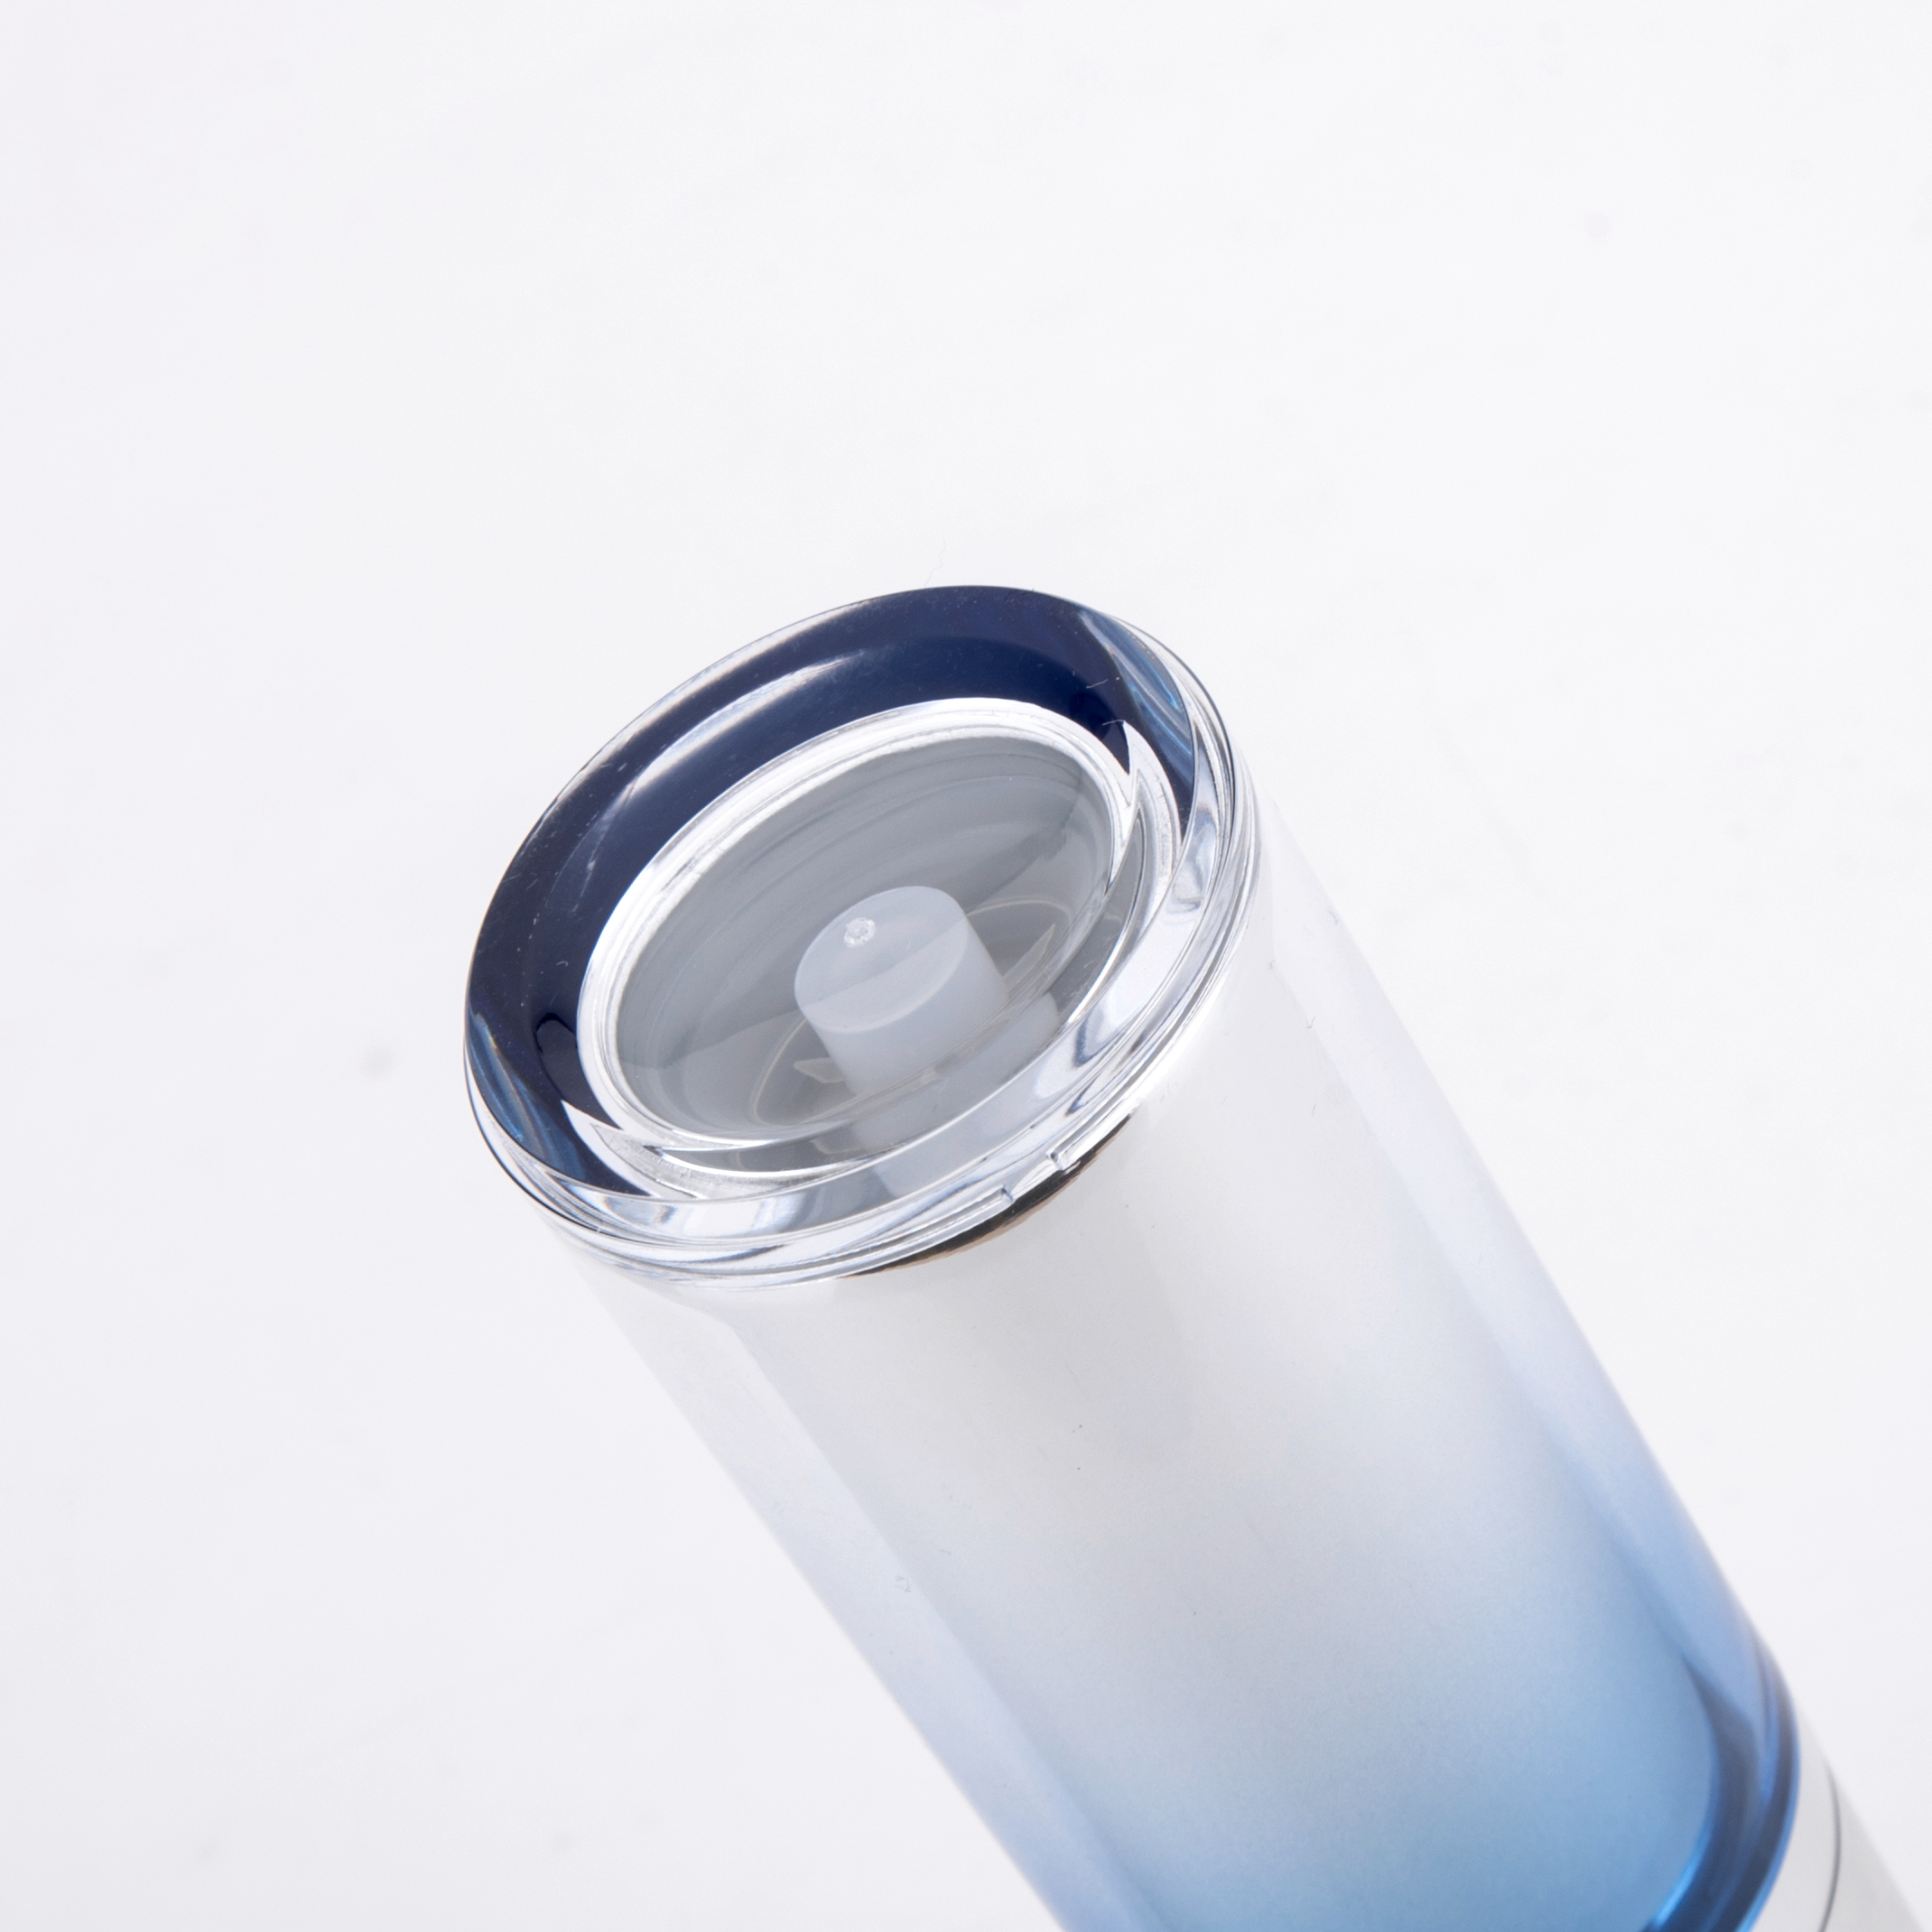 15ml 30ml 50ml Acrylic Airless Pump Bottle For Cosmetics